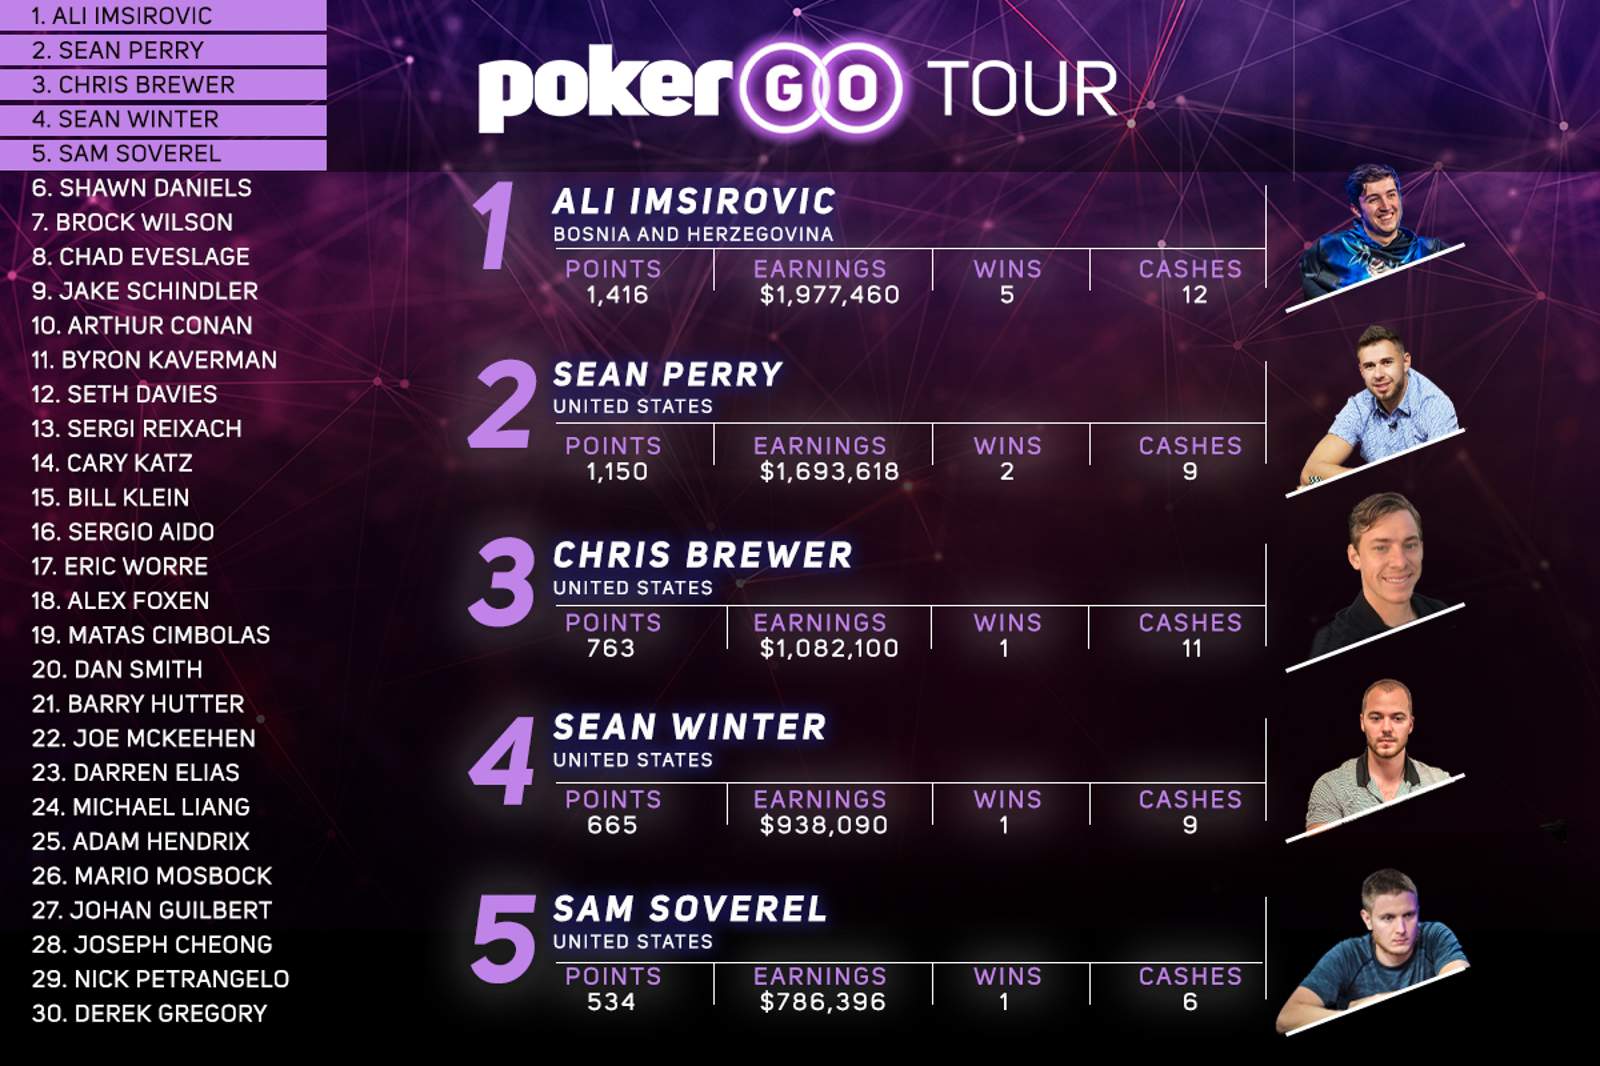 PokerGO Tour Leaderboard: Shawn Daniels Makes Surge While Ali Imsirovic Stays On Top